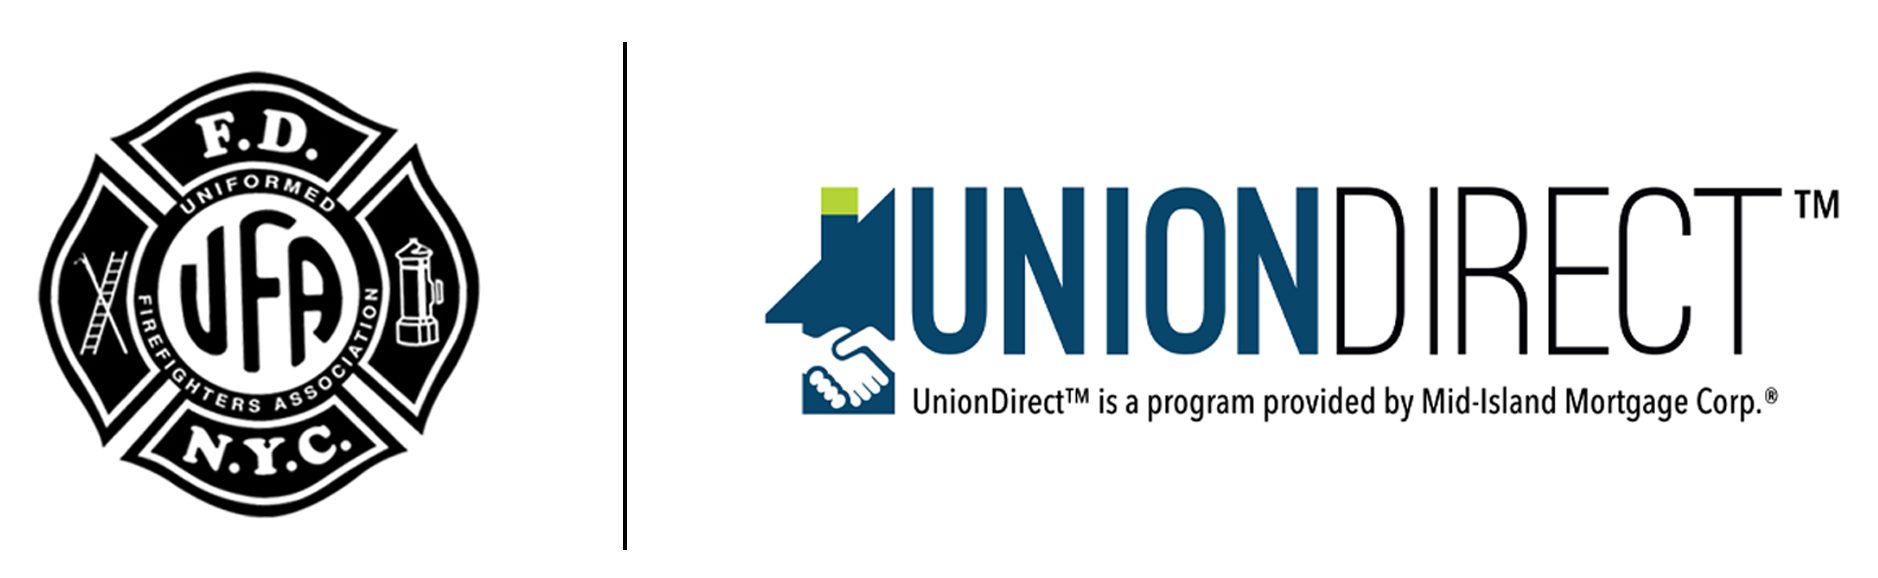 UFA 2 Union Direct